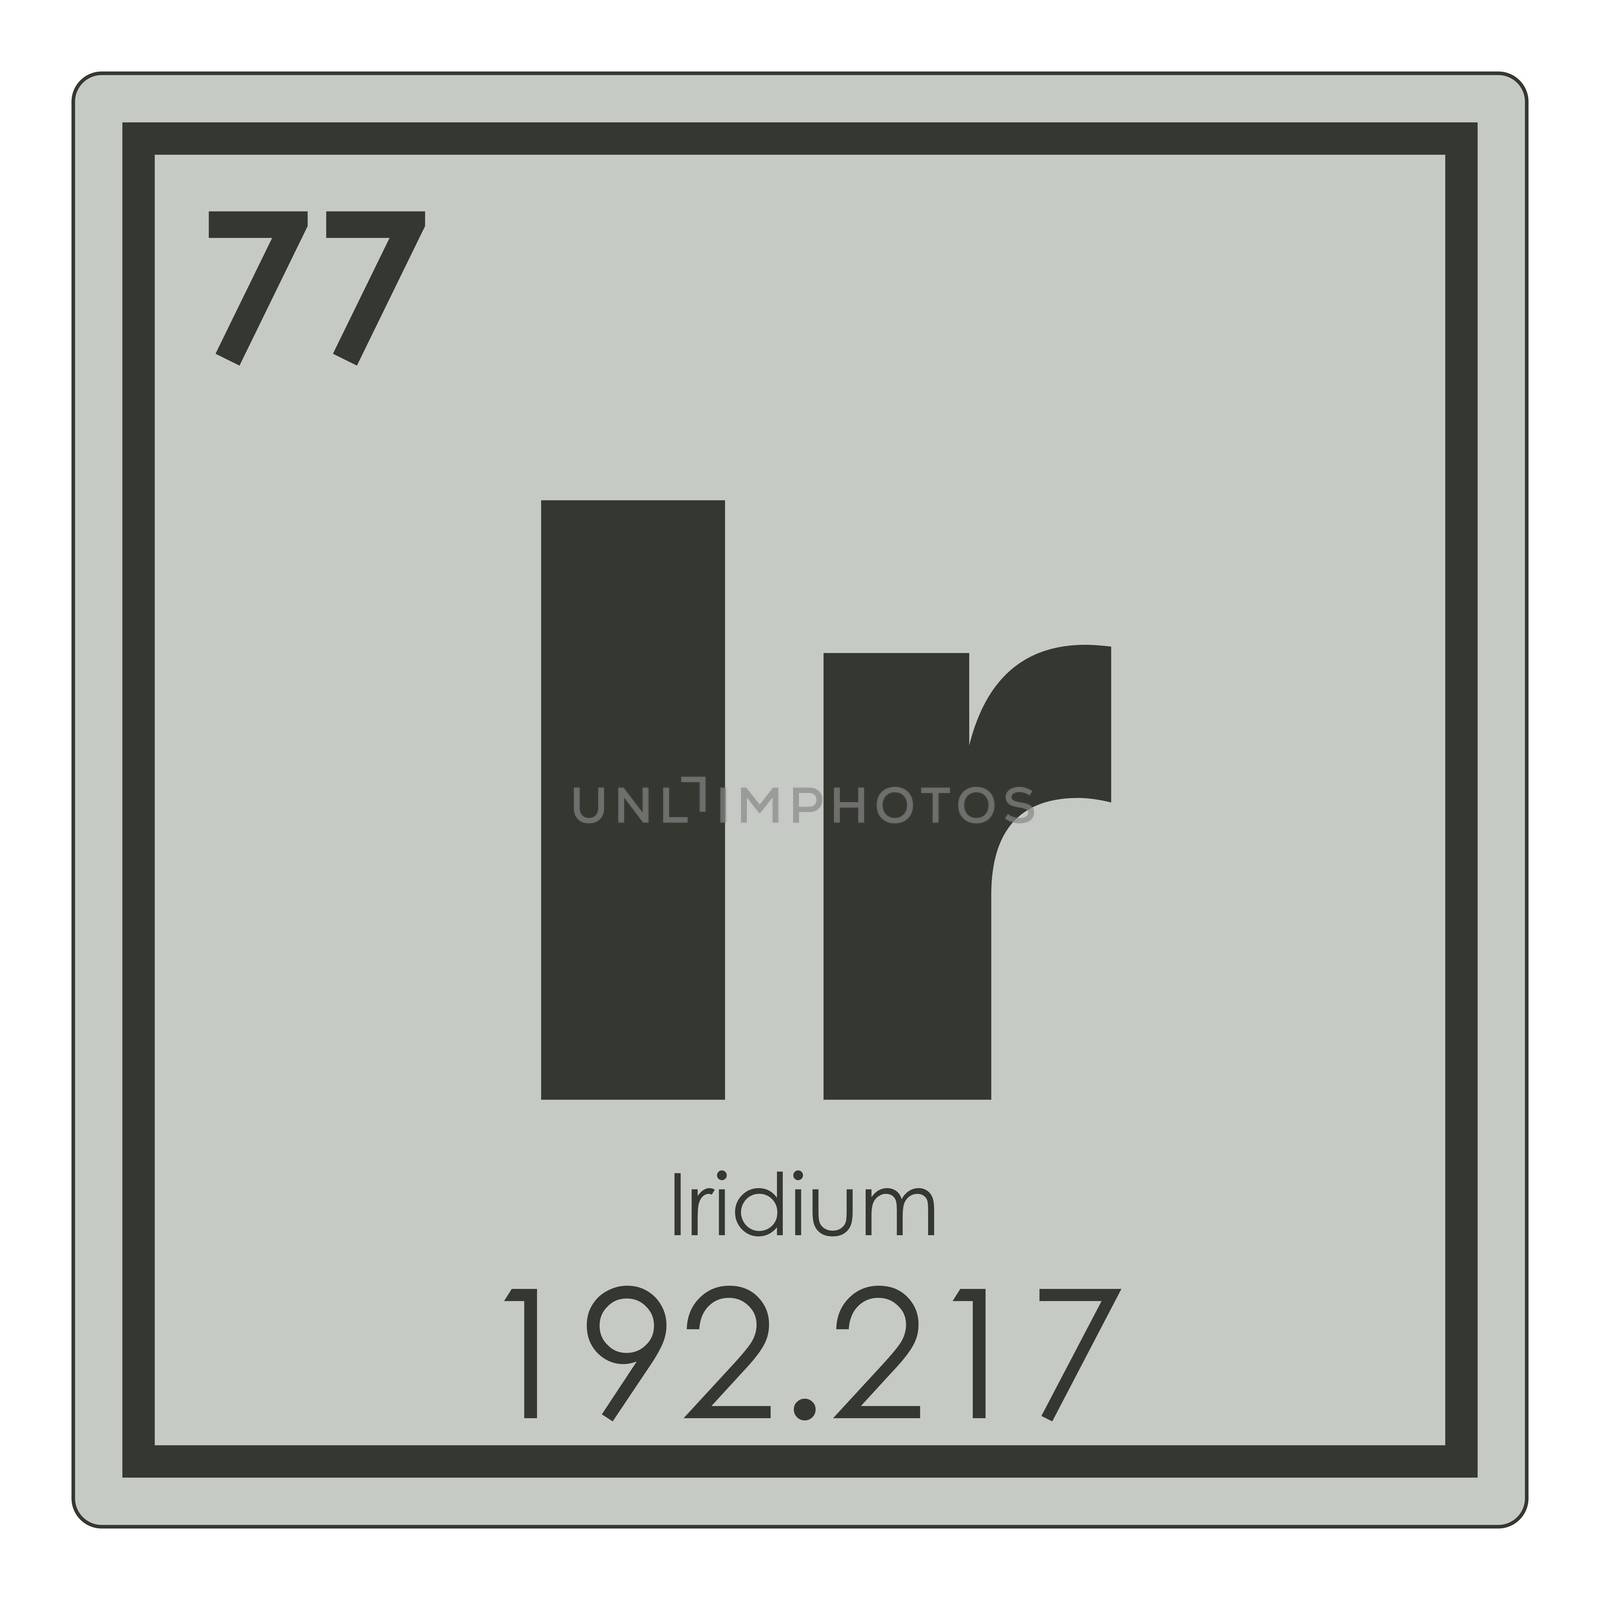 Iridium chemical element by tony4urban